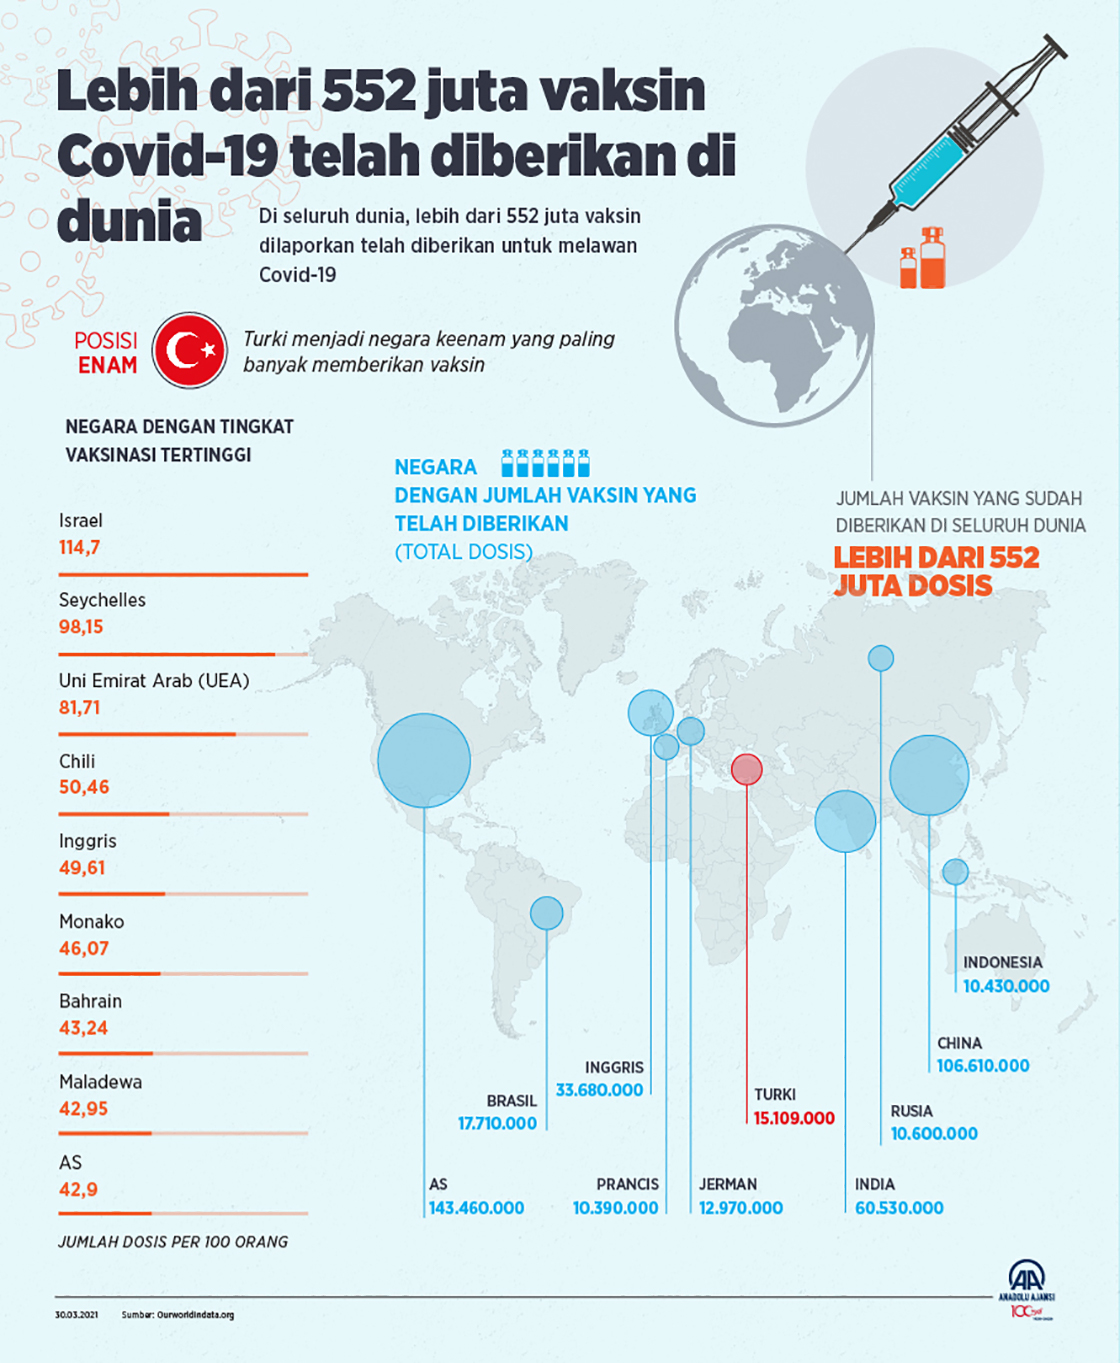 Lebih dari 552 juta vaksin Covid-19 telah diberikan di dunia